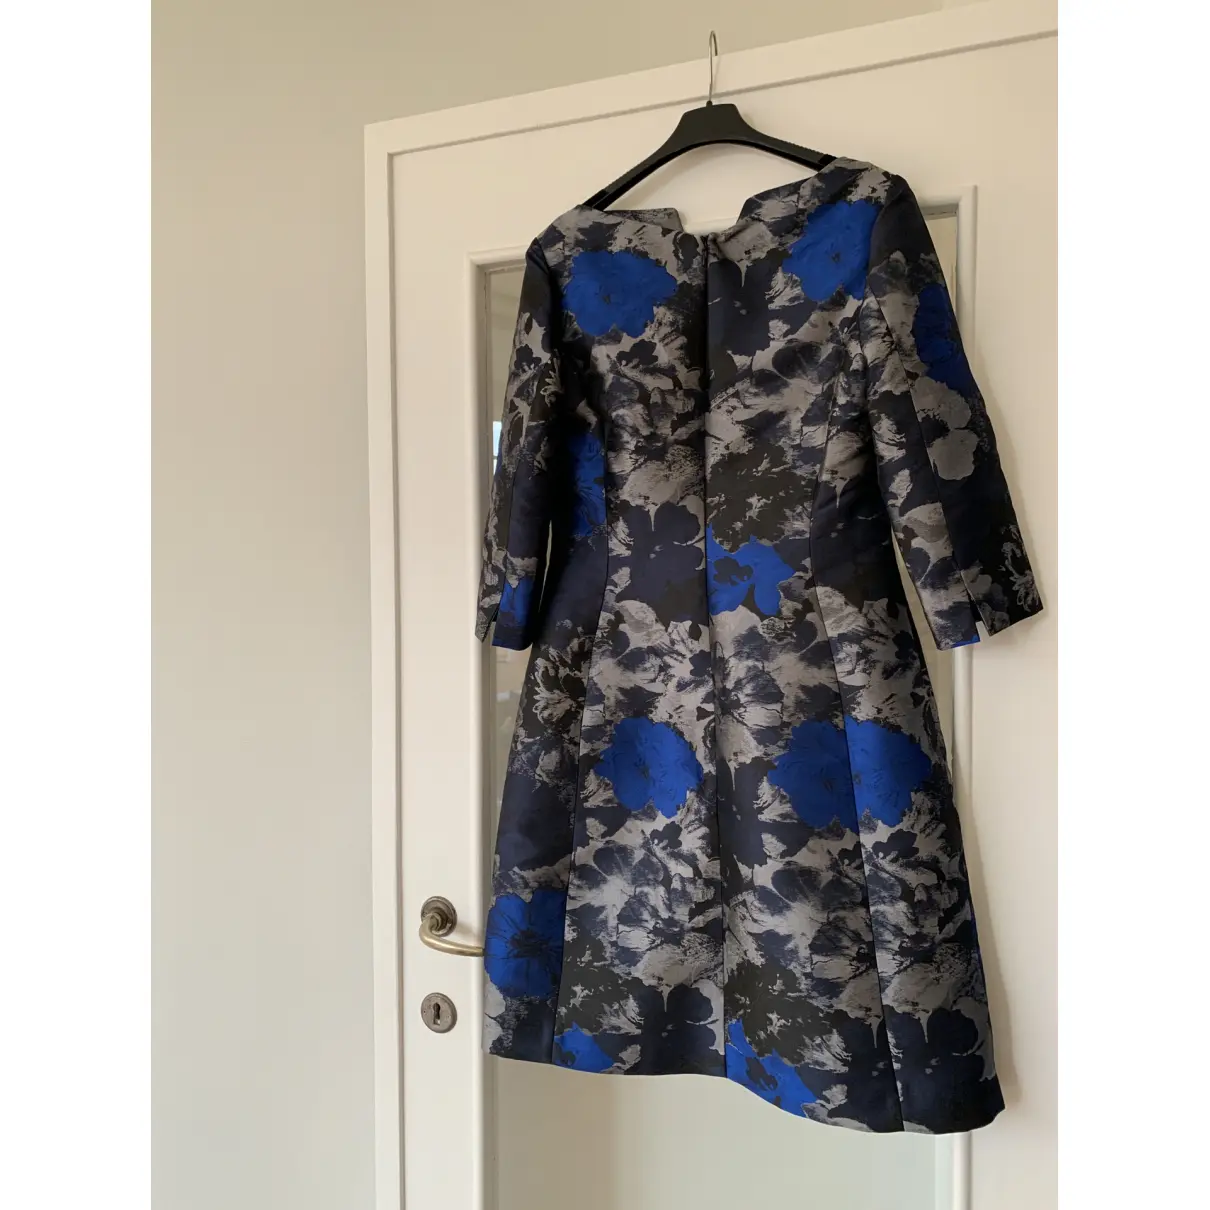 Buy Nathan Silk mid-length dress online